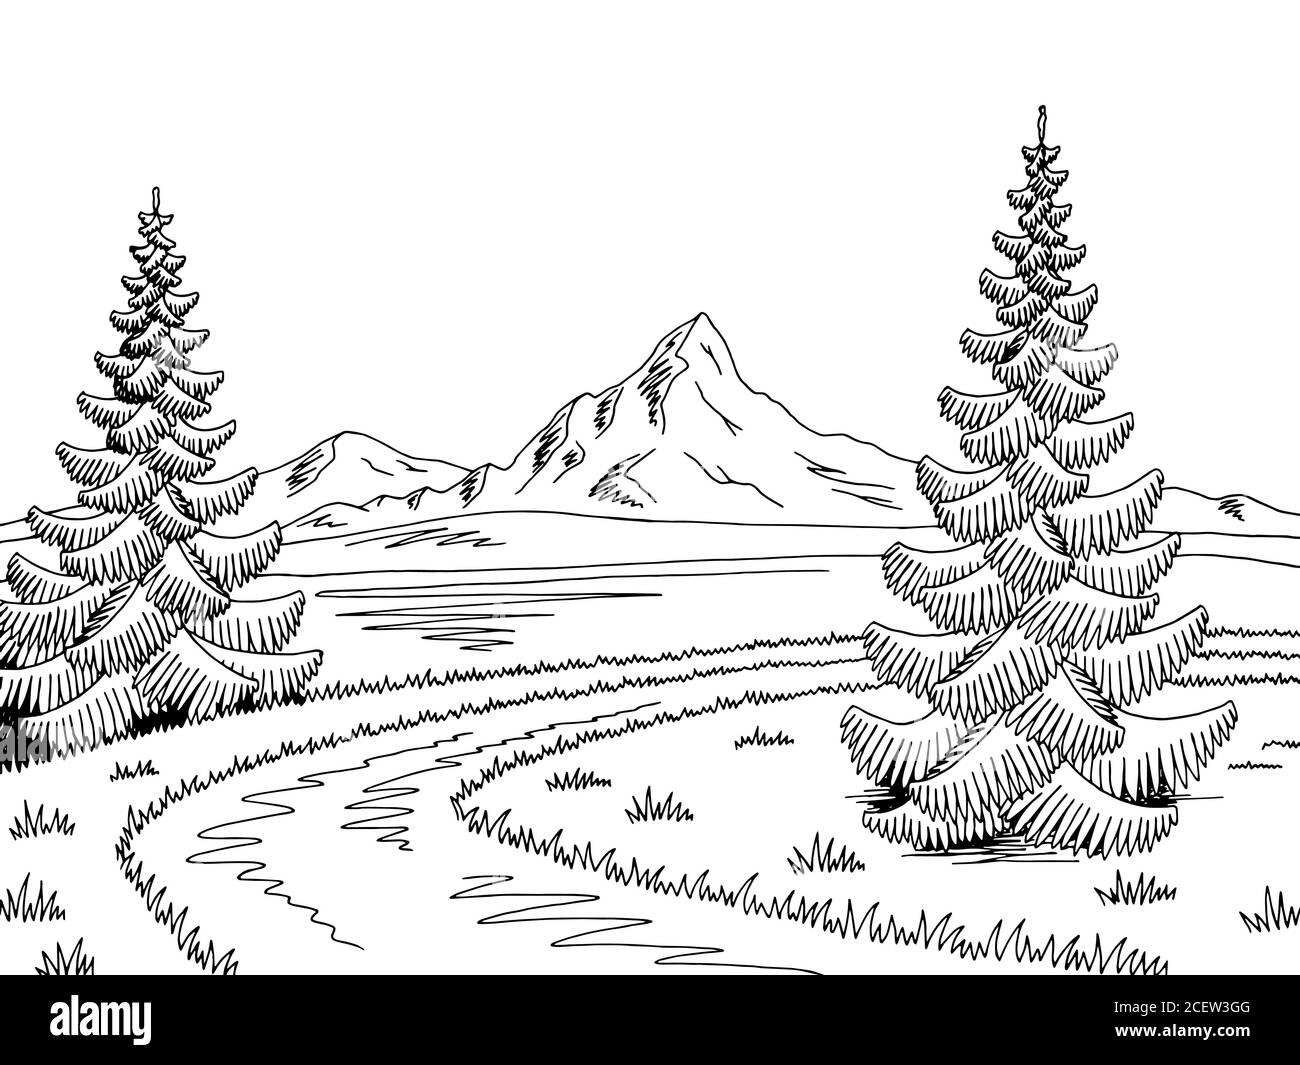 Mountain River Road Grafik schwarz weiß Landschaft Skizze Illustration Vektor Stock Vektor